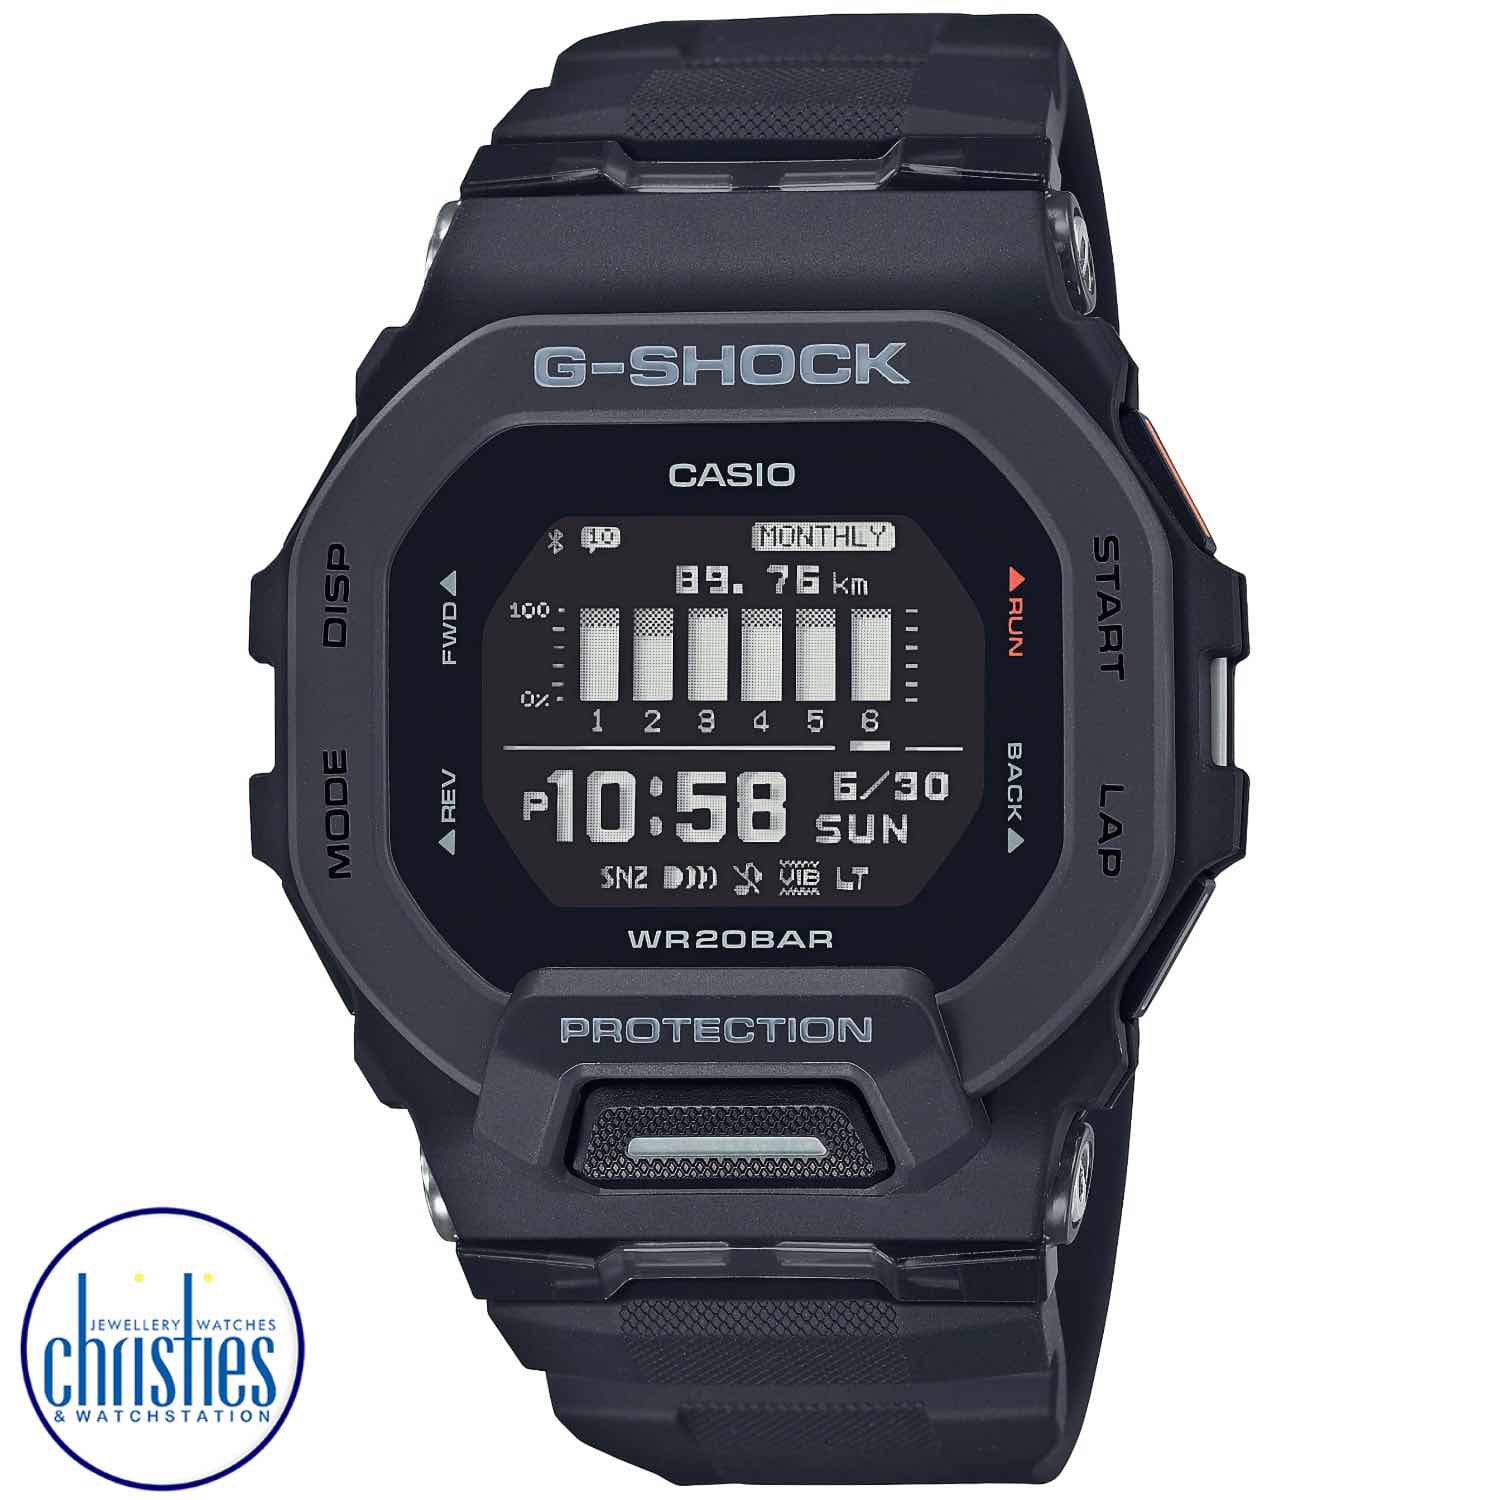 GBD200UU-1D Casio G-Shock G-SQUAD Watch cheap casio watches nz